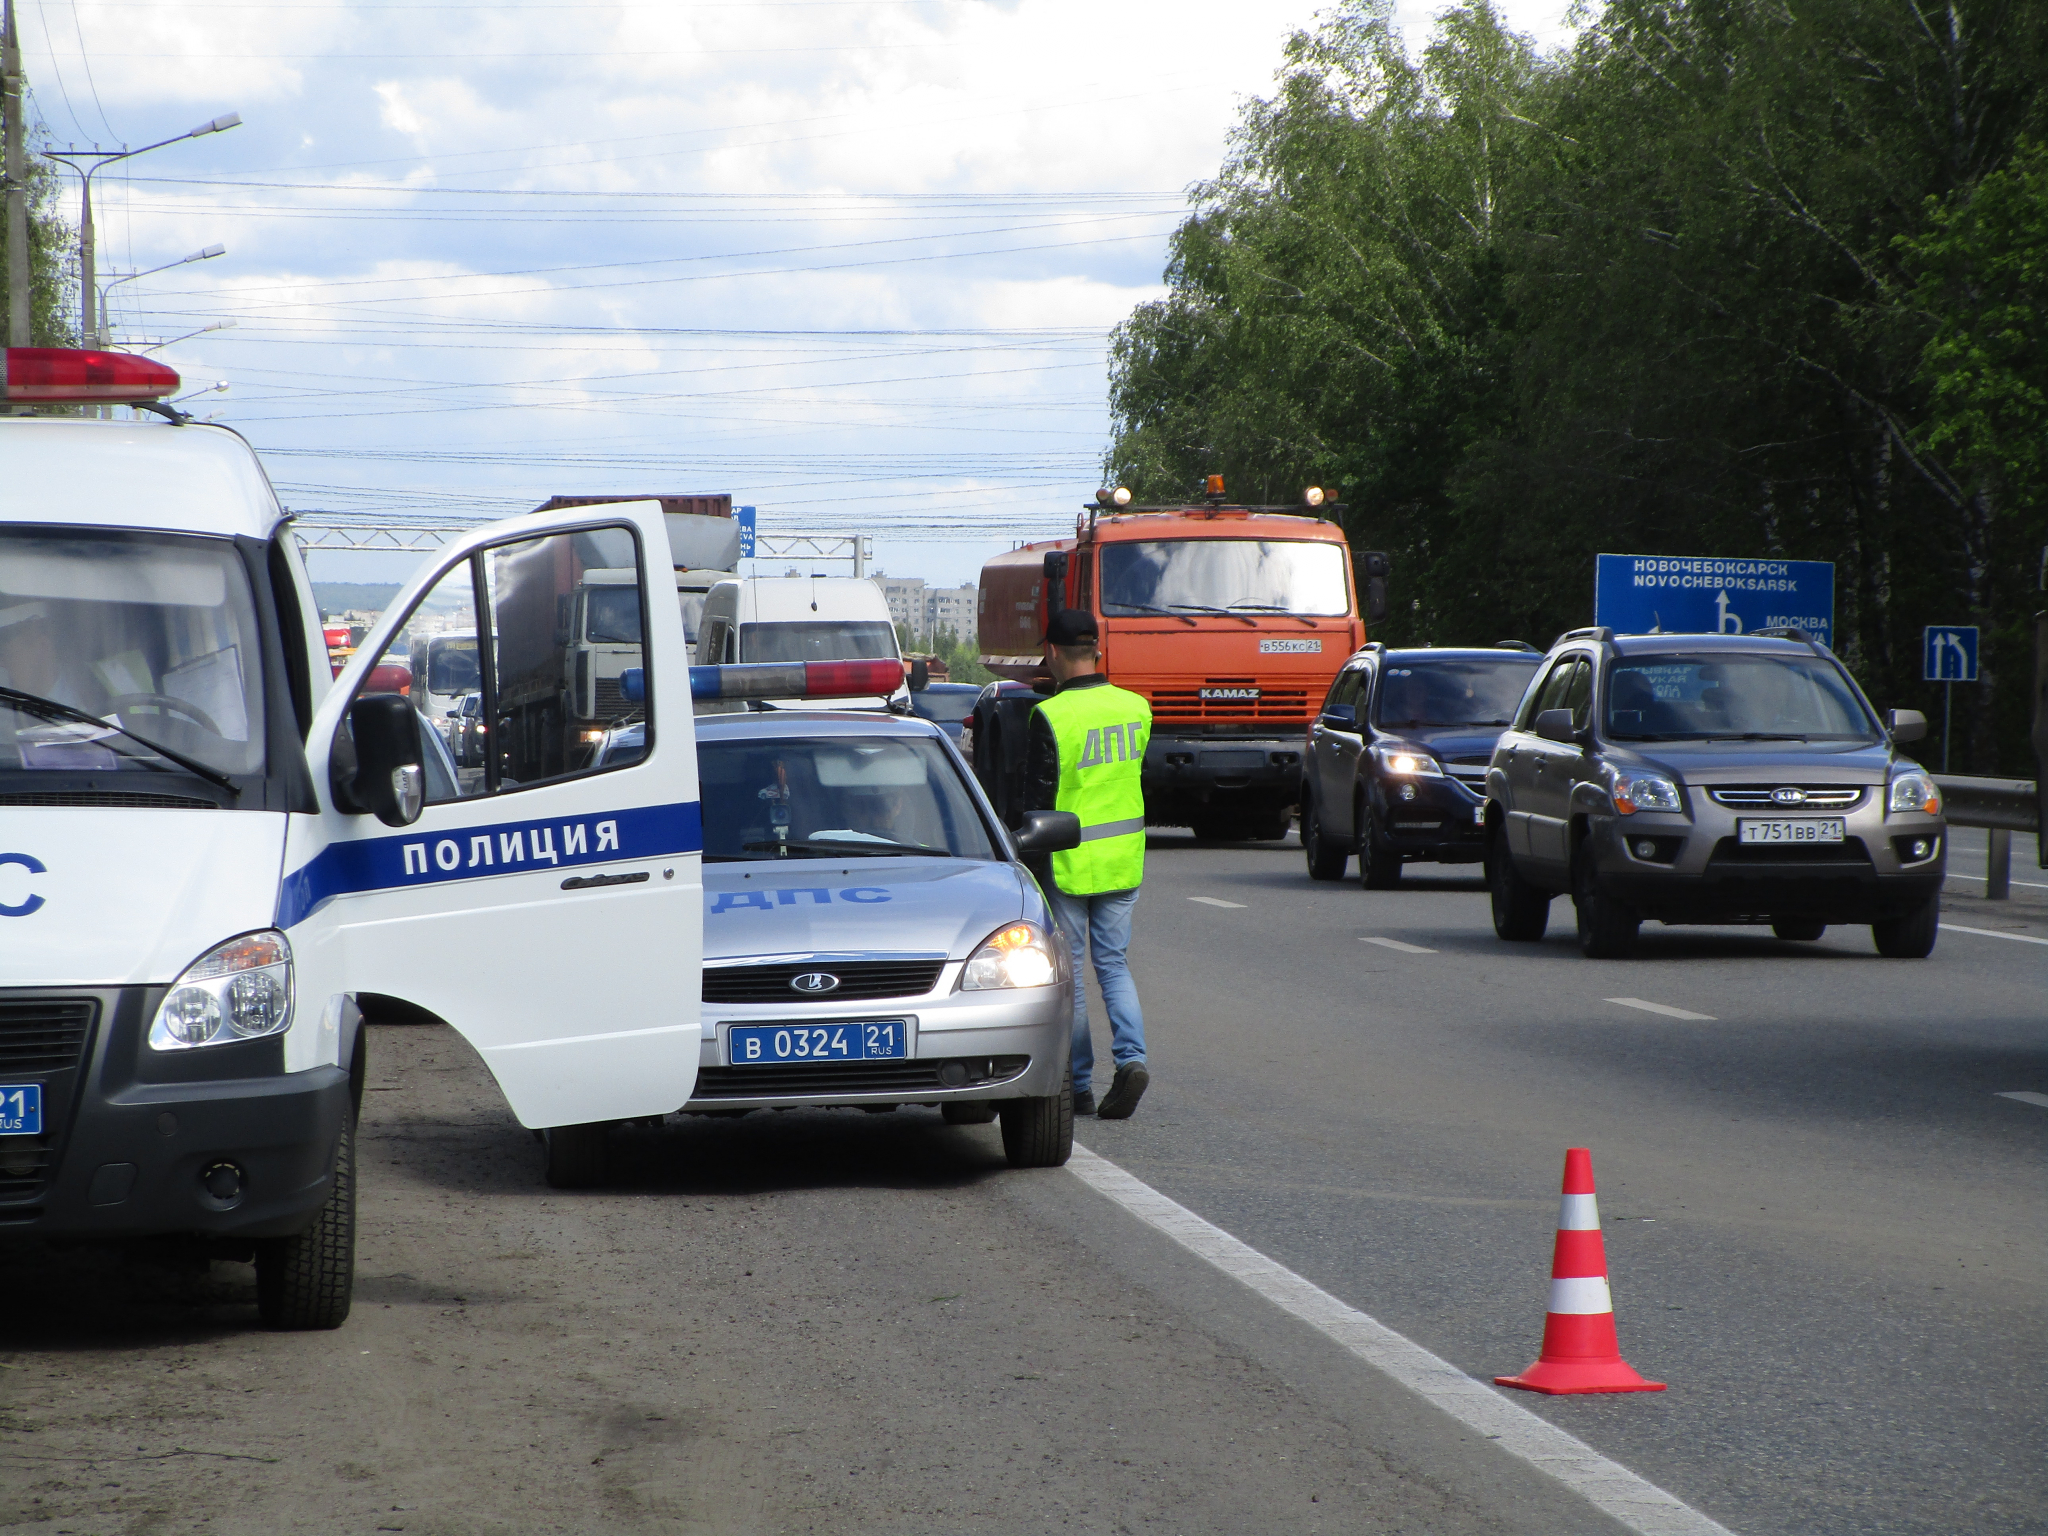 В Мордовии «Двенадцатая» сбила двоих пешеходов: один мужчина скончался на месте ДТП